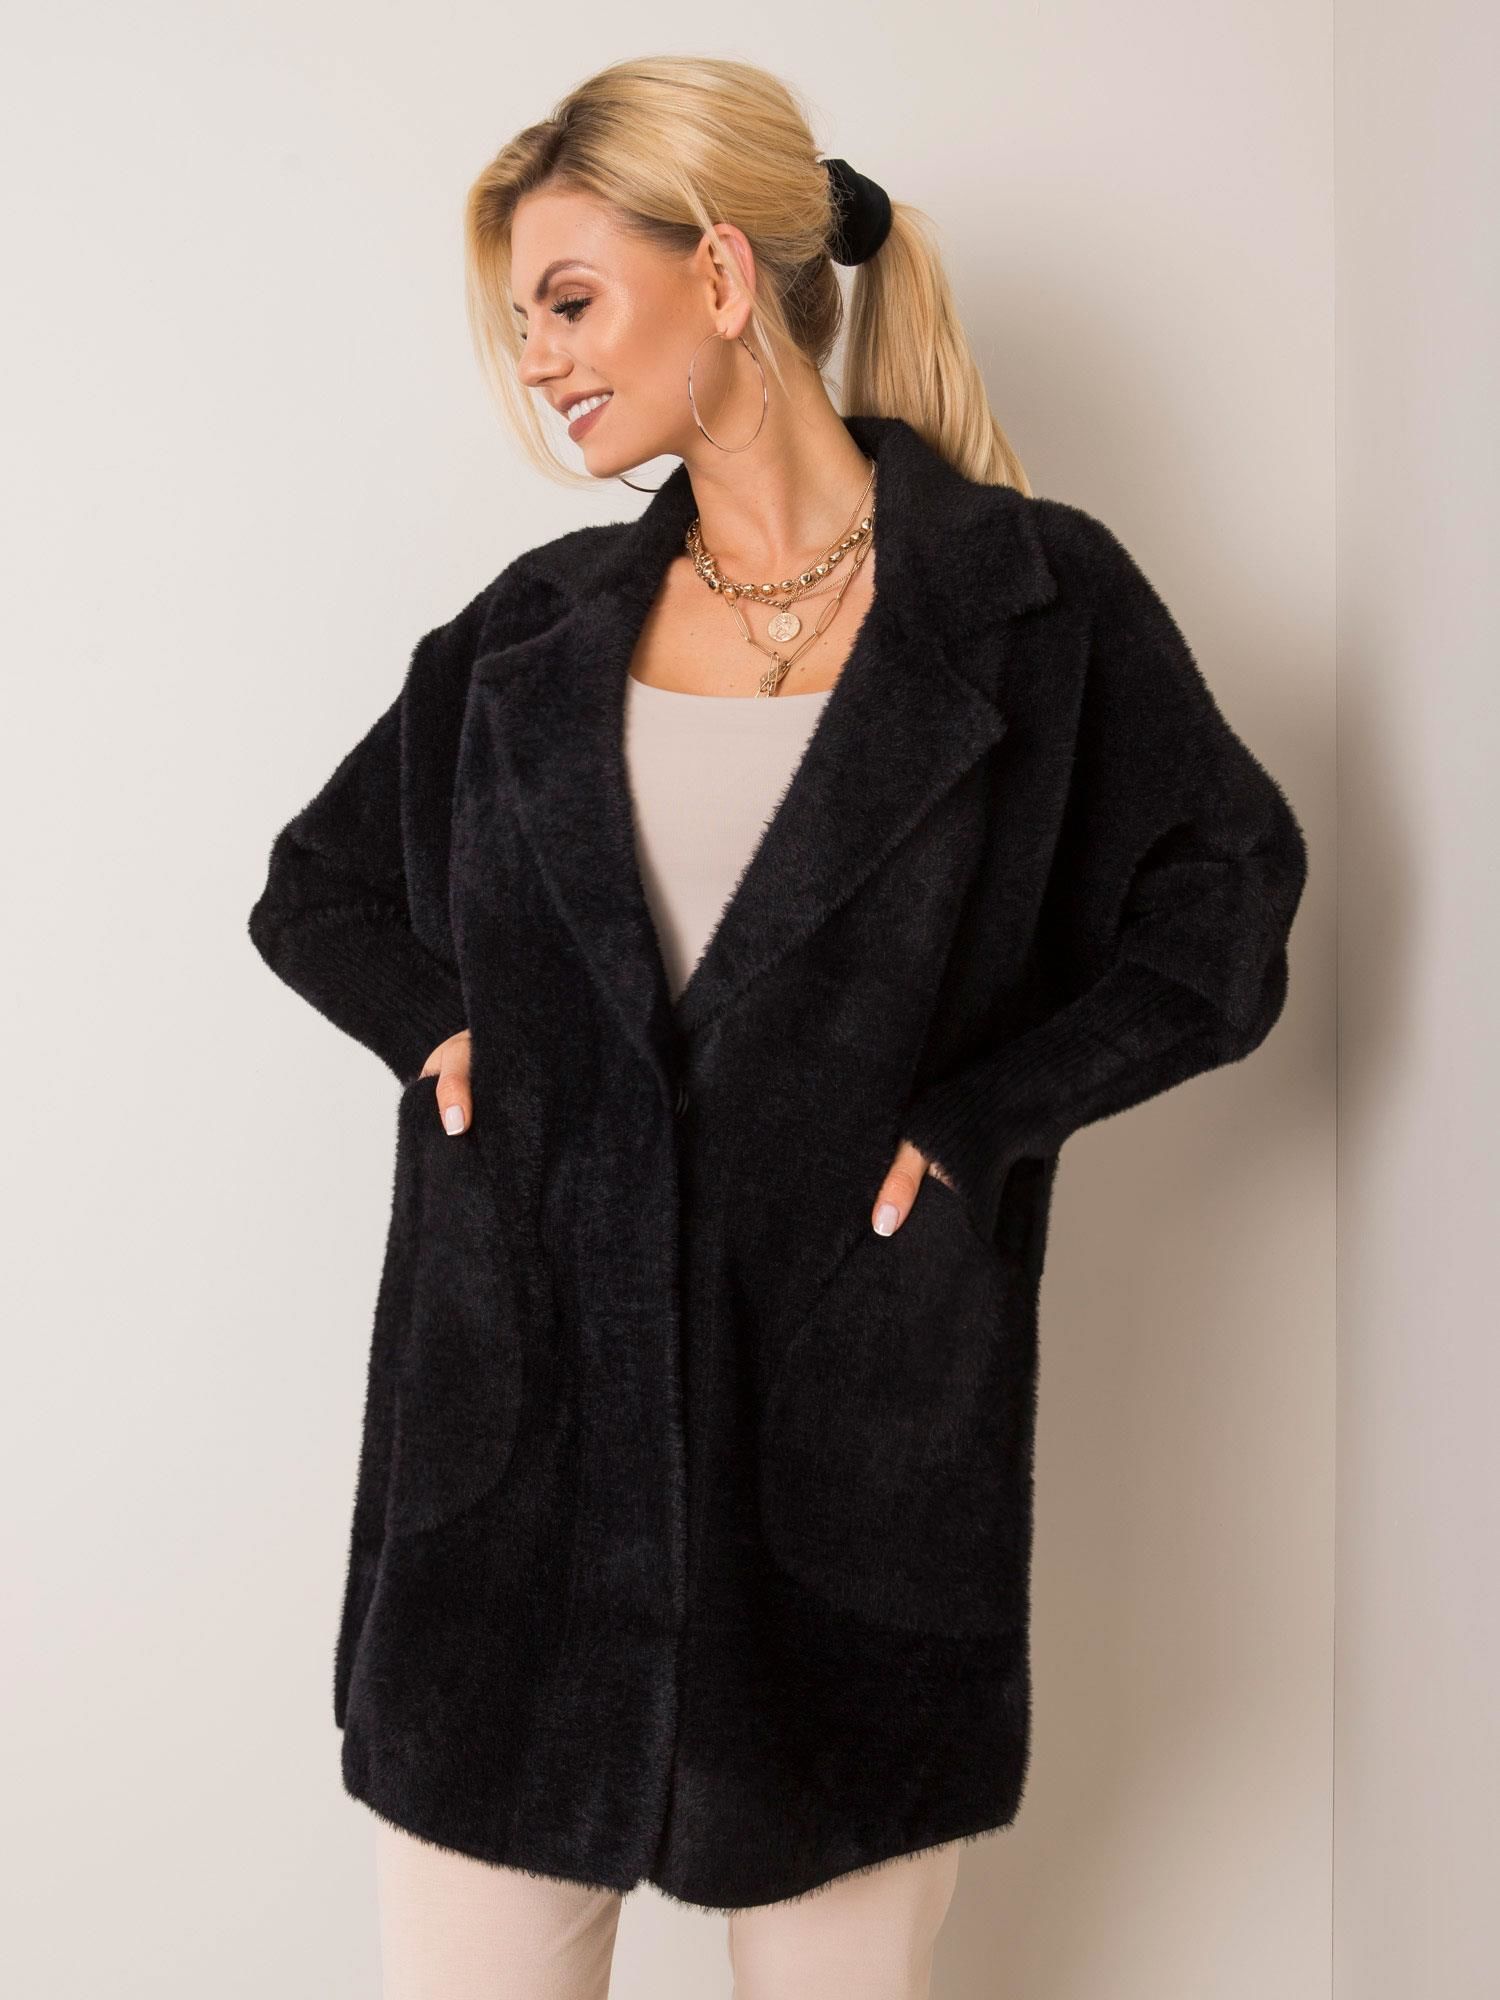 Black Fluffy Coat From Alpaca